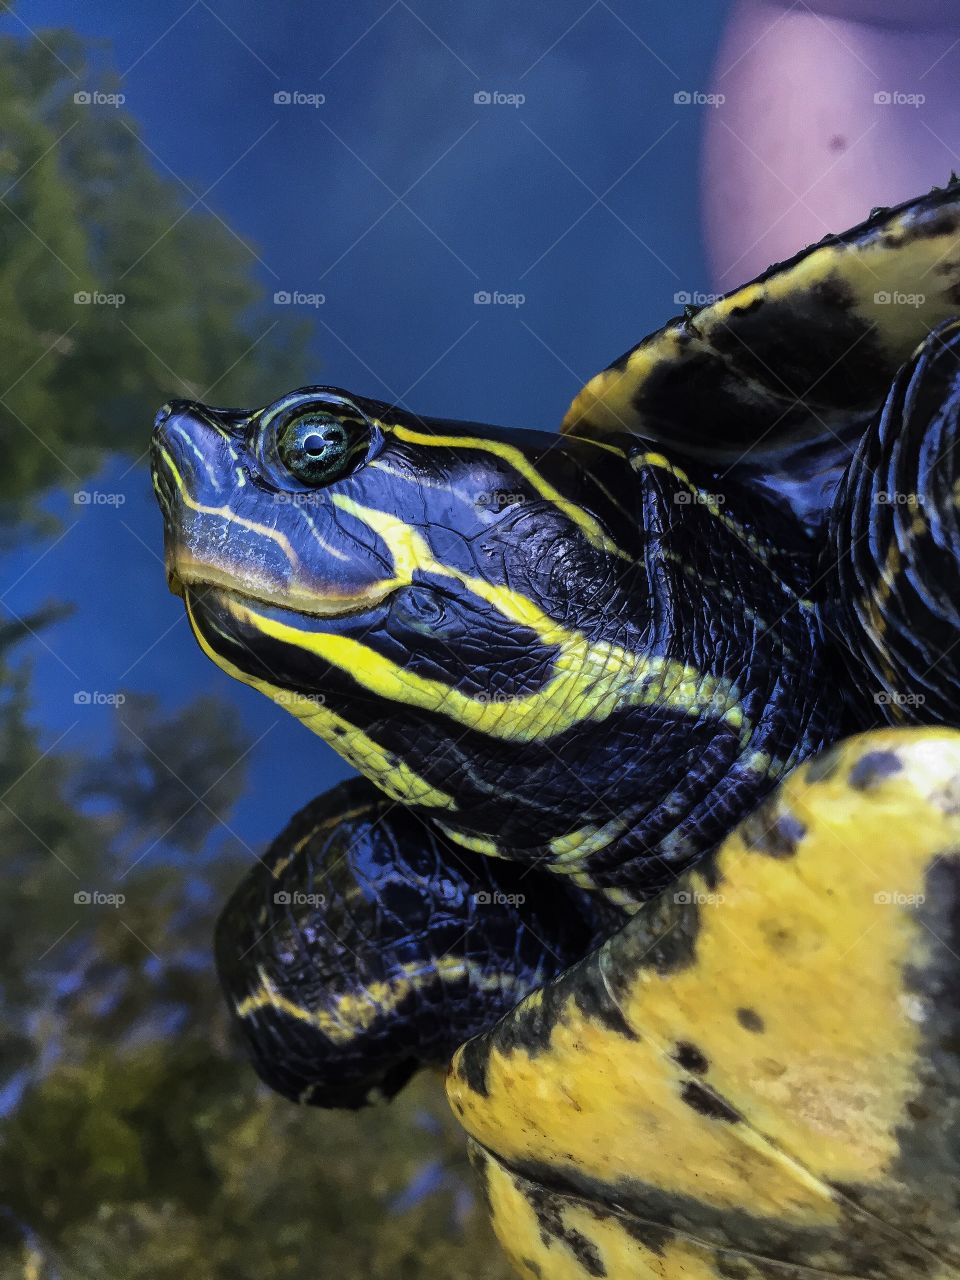 Suwanee Cooter Turtle